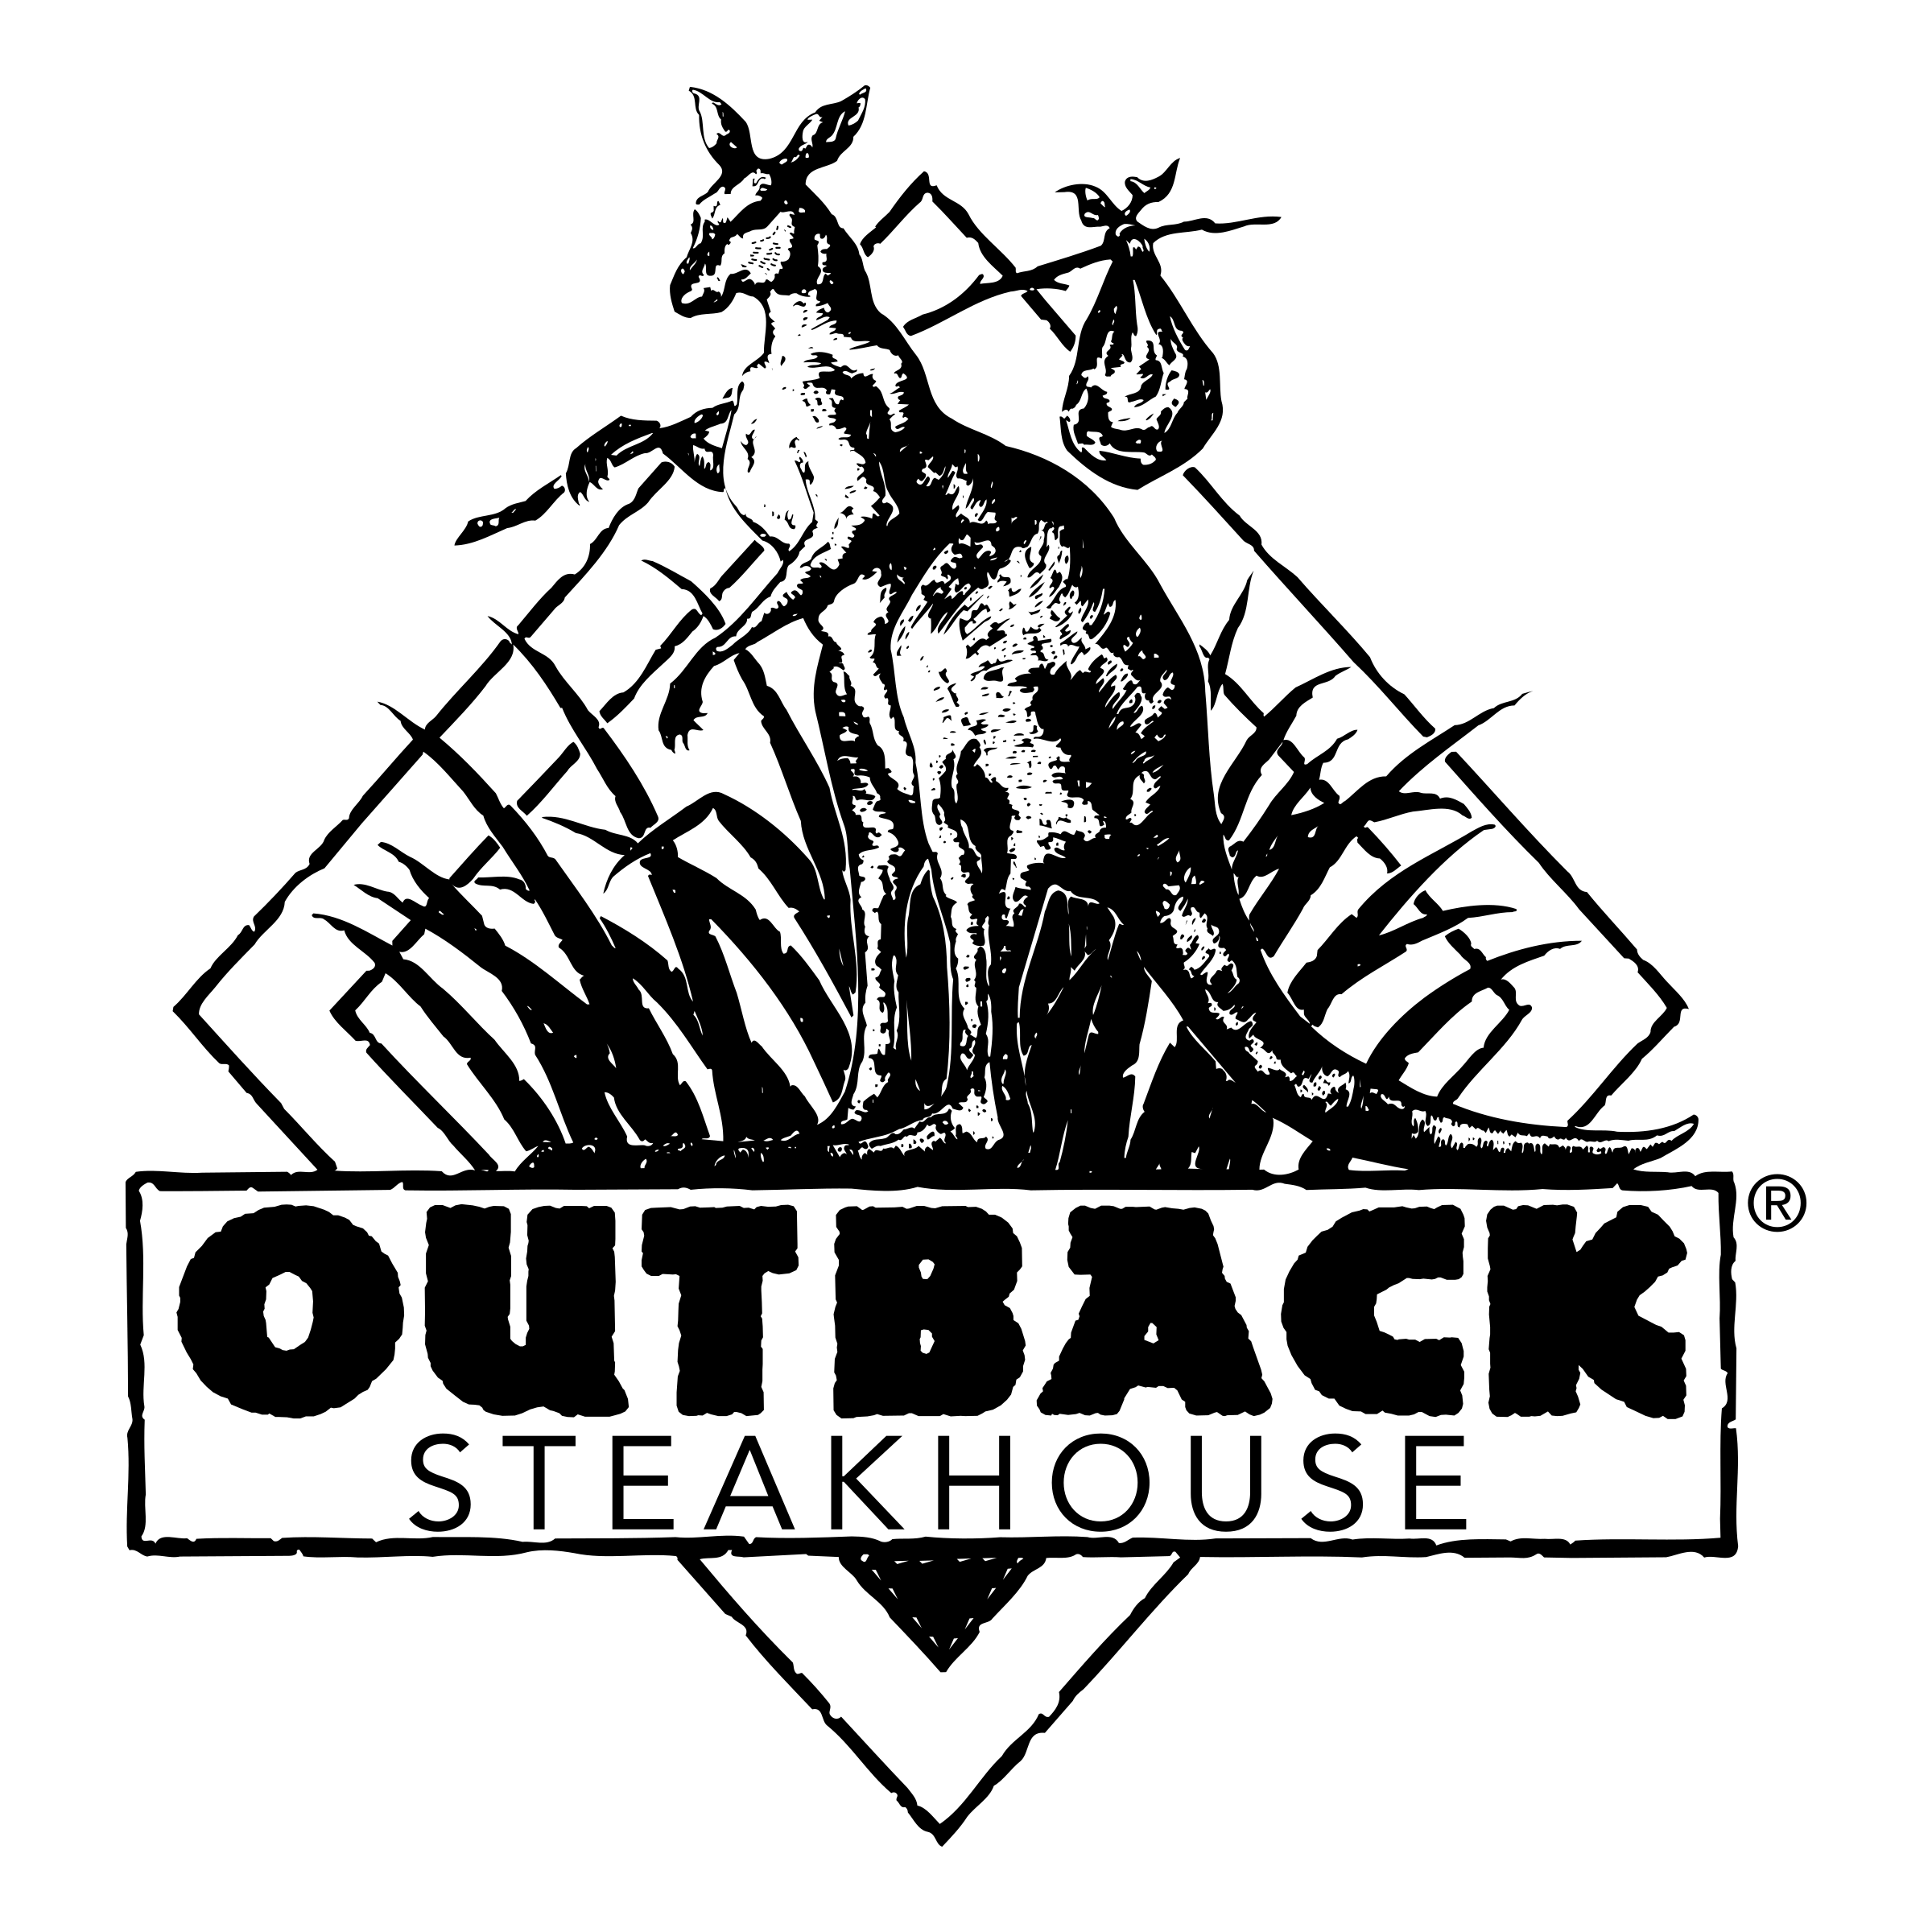 Outback Steakhouse Logo - Outback Steakhouse Logo PNG Transparent & SVG Vector - Freebie Supply